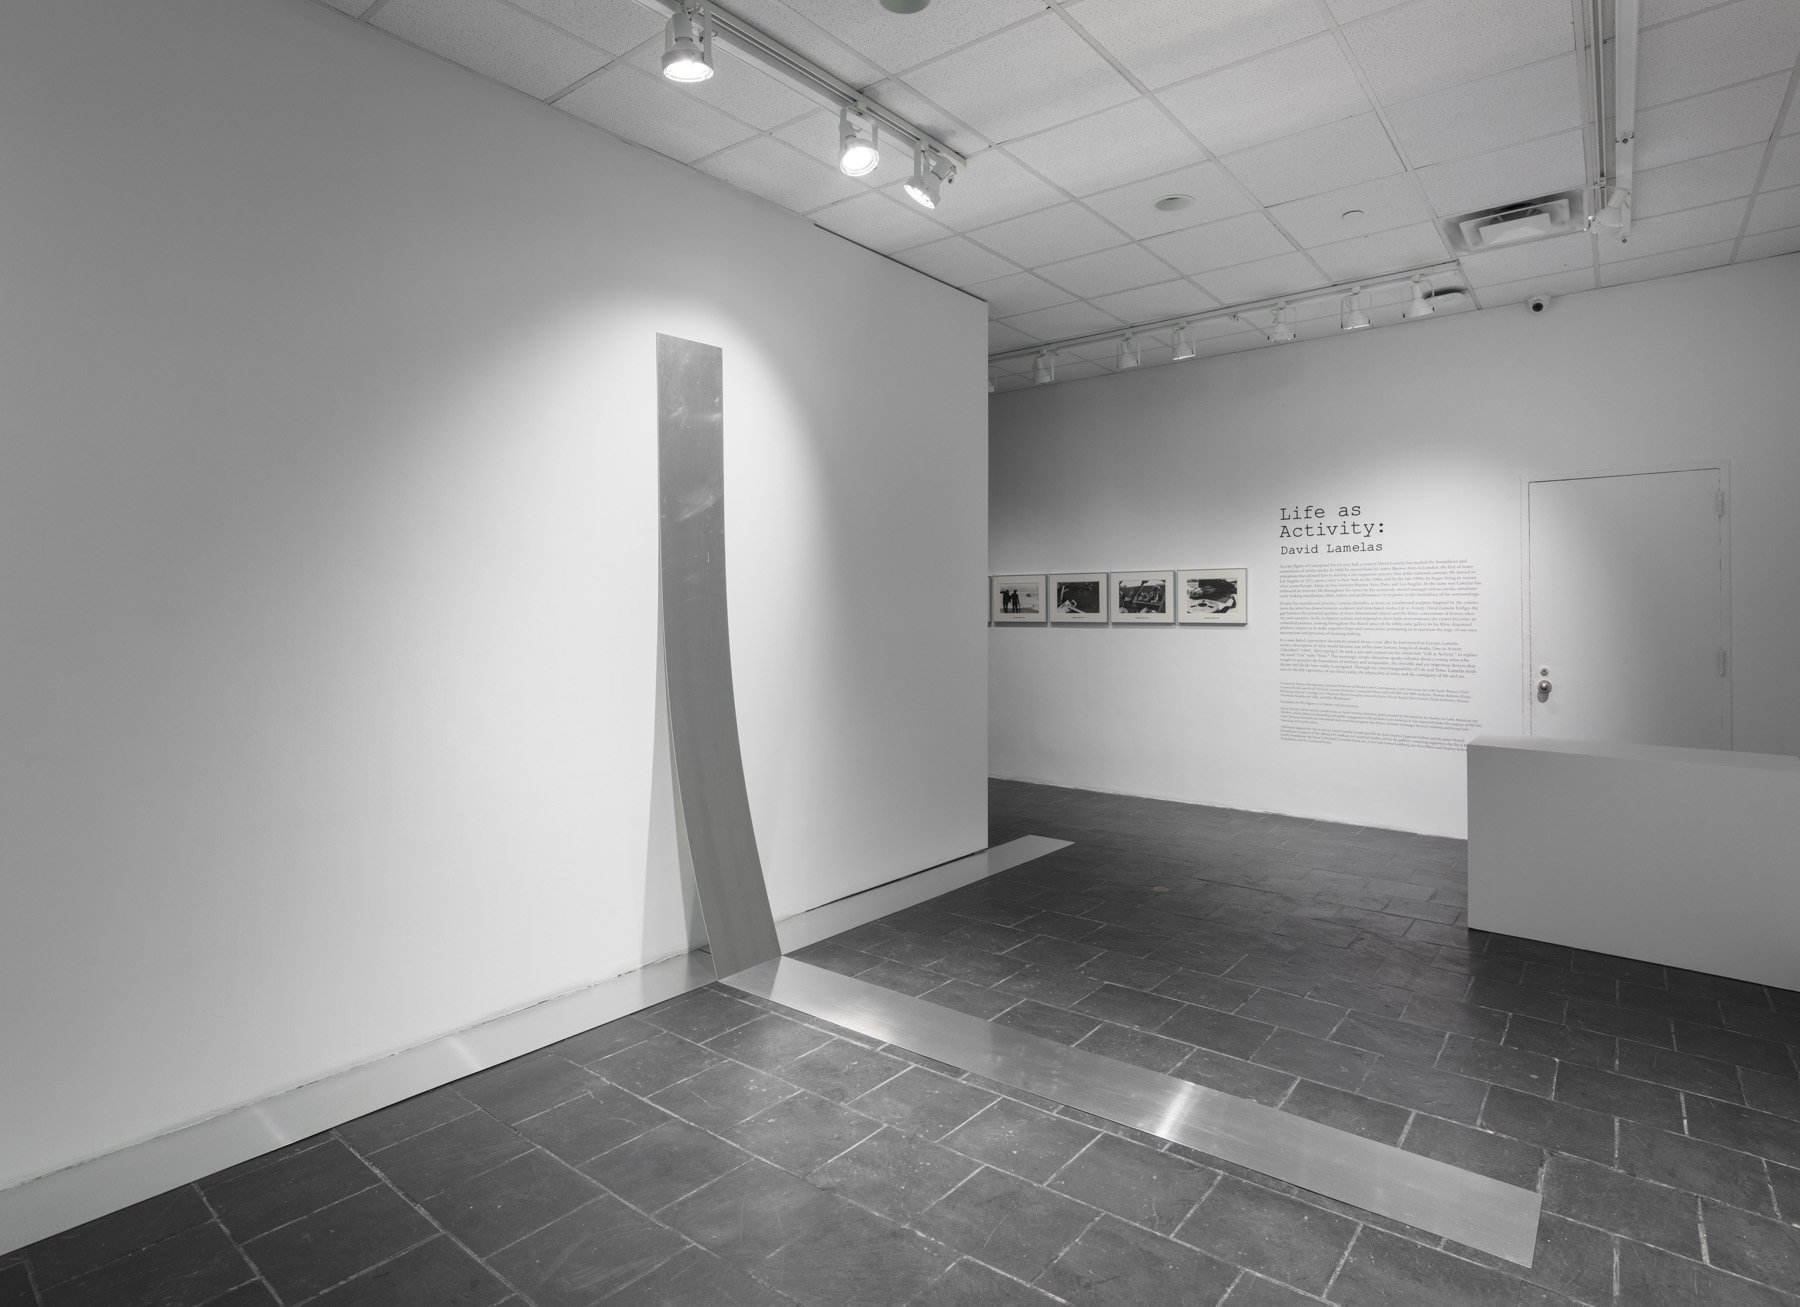  Installation view of  Life as Activity: David Lamelas  at Hunter College Art Galleries’ Leubsdorf Gallery, 2021.  